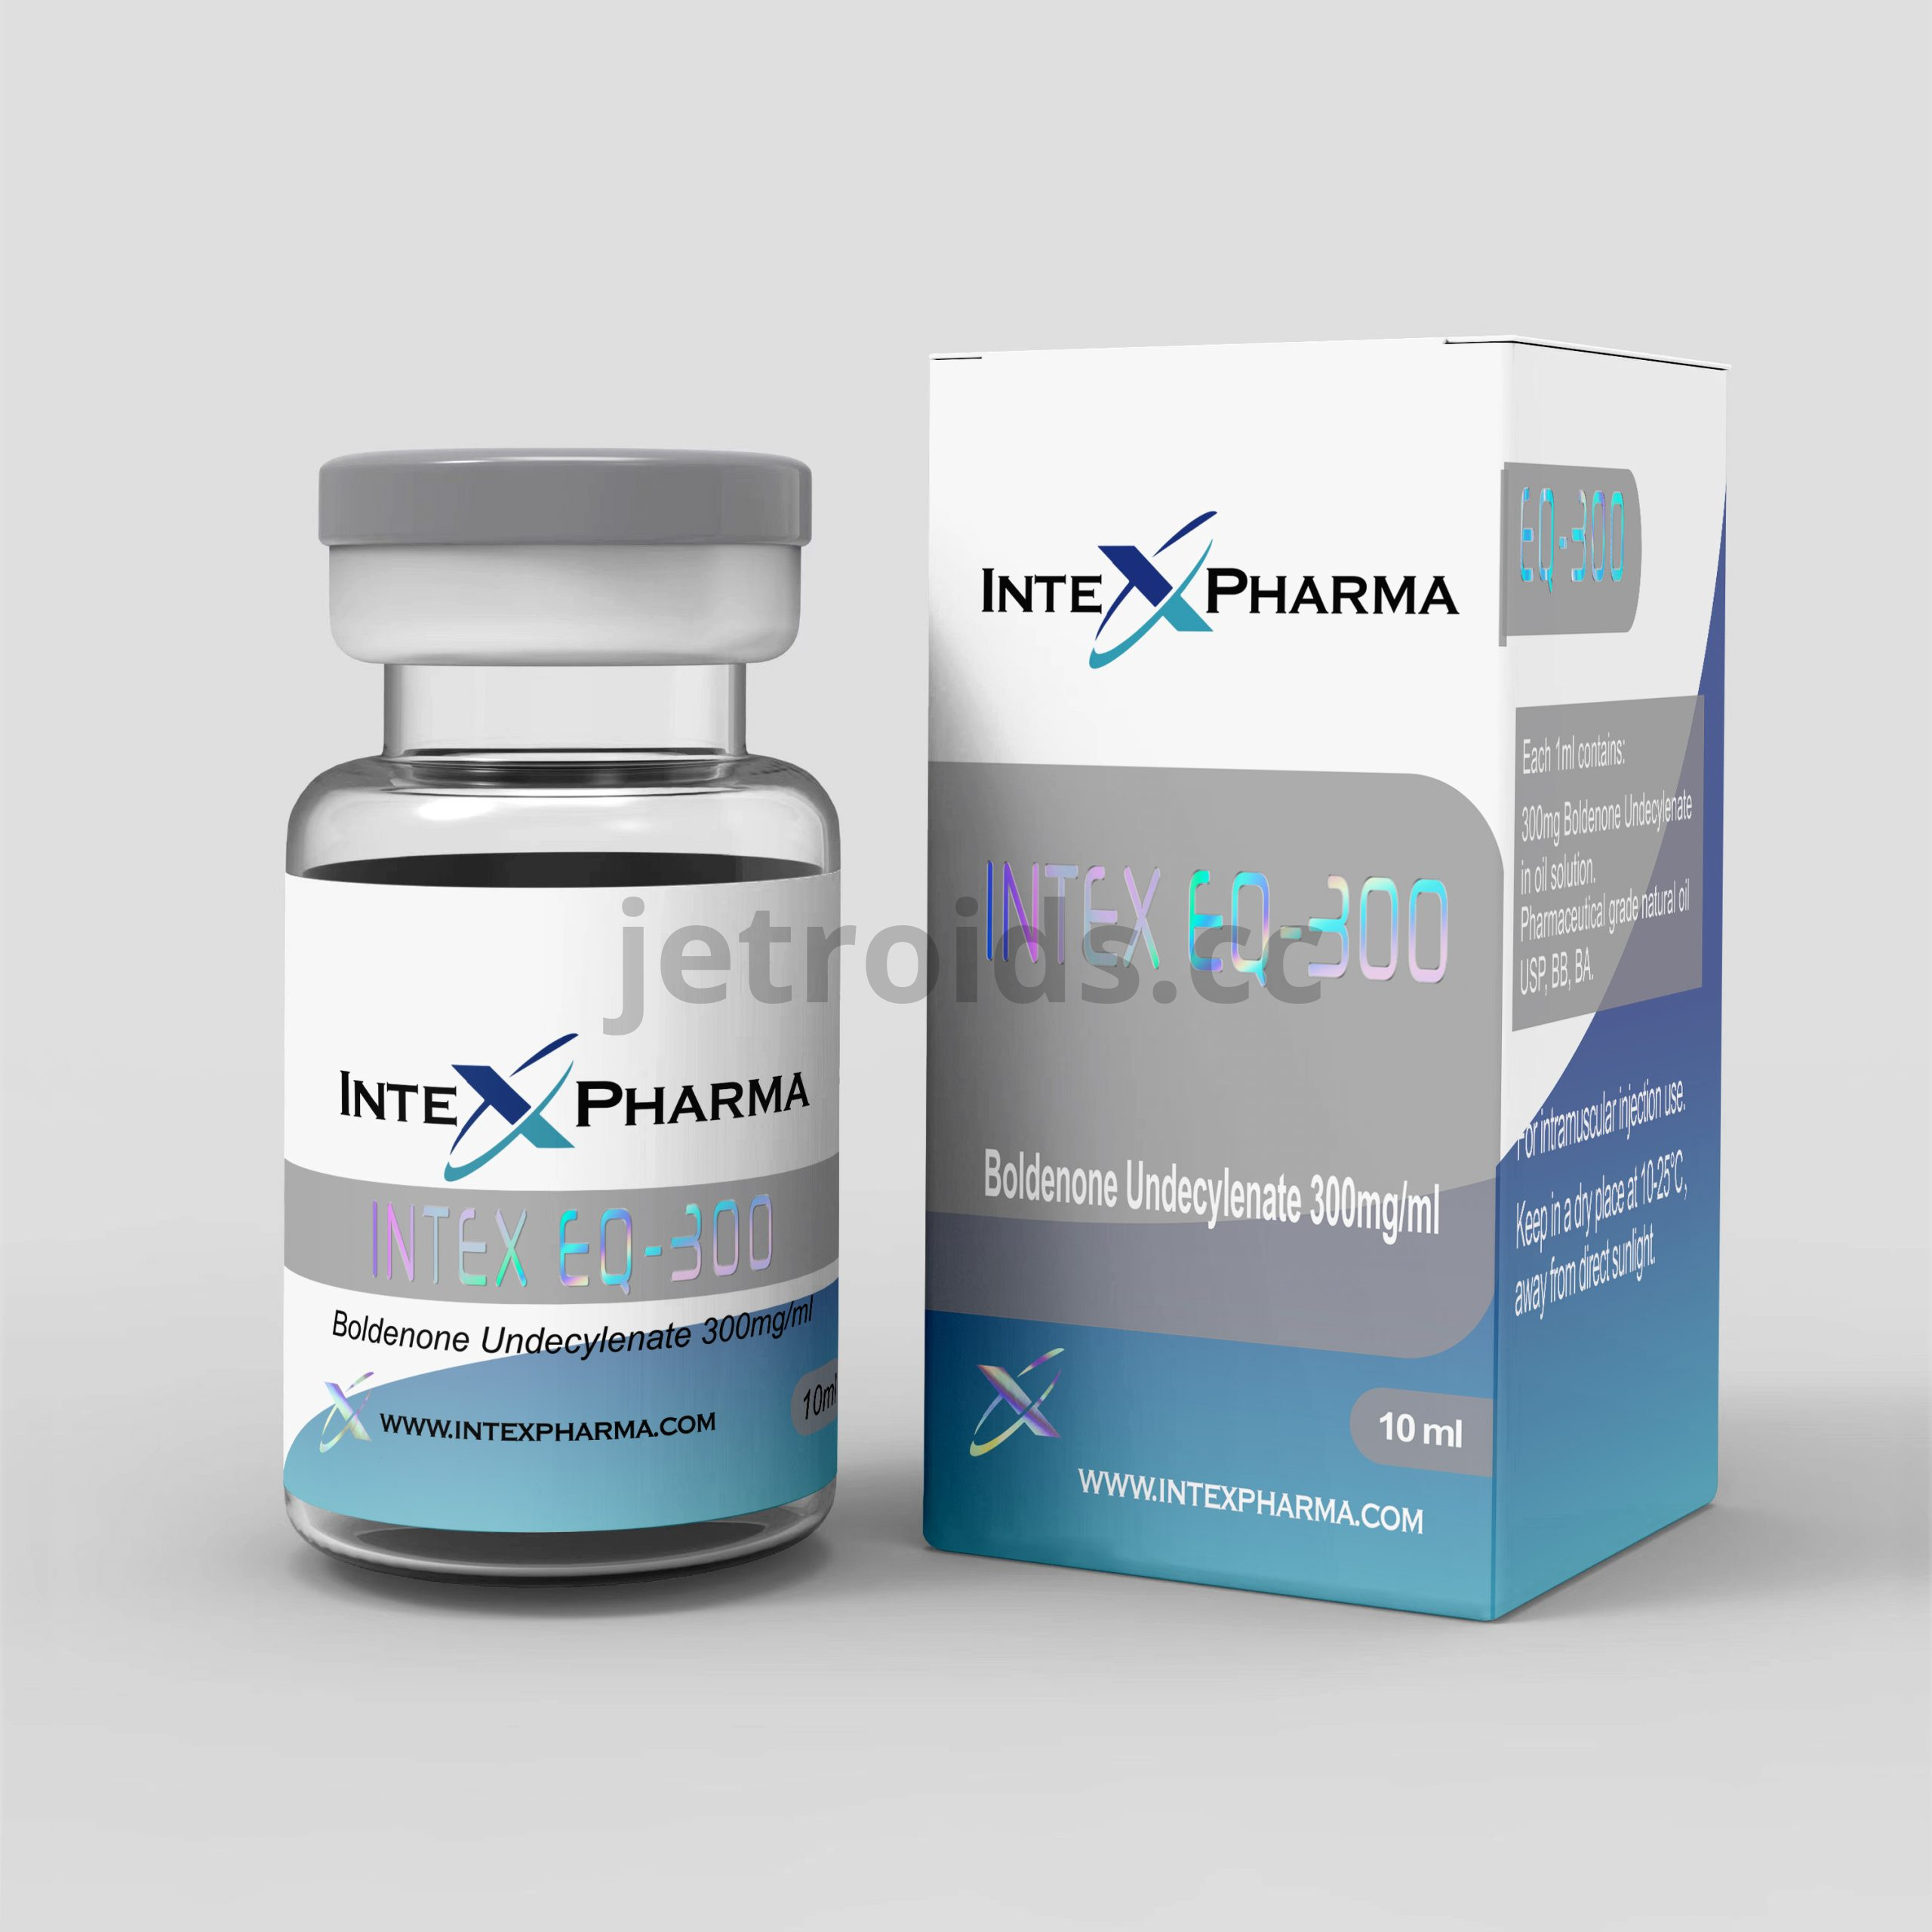 IntexPharma Intex EQ-300 Product Info